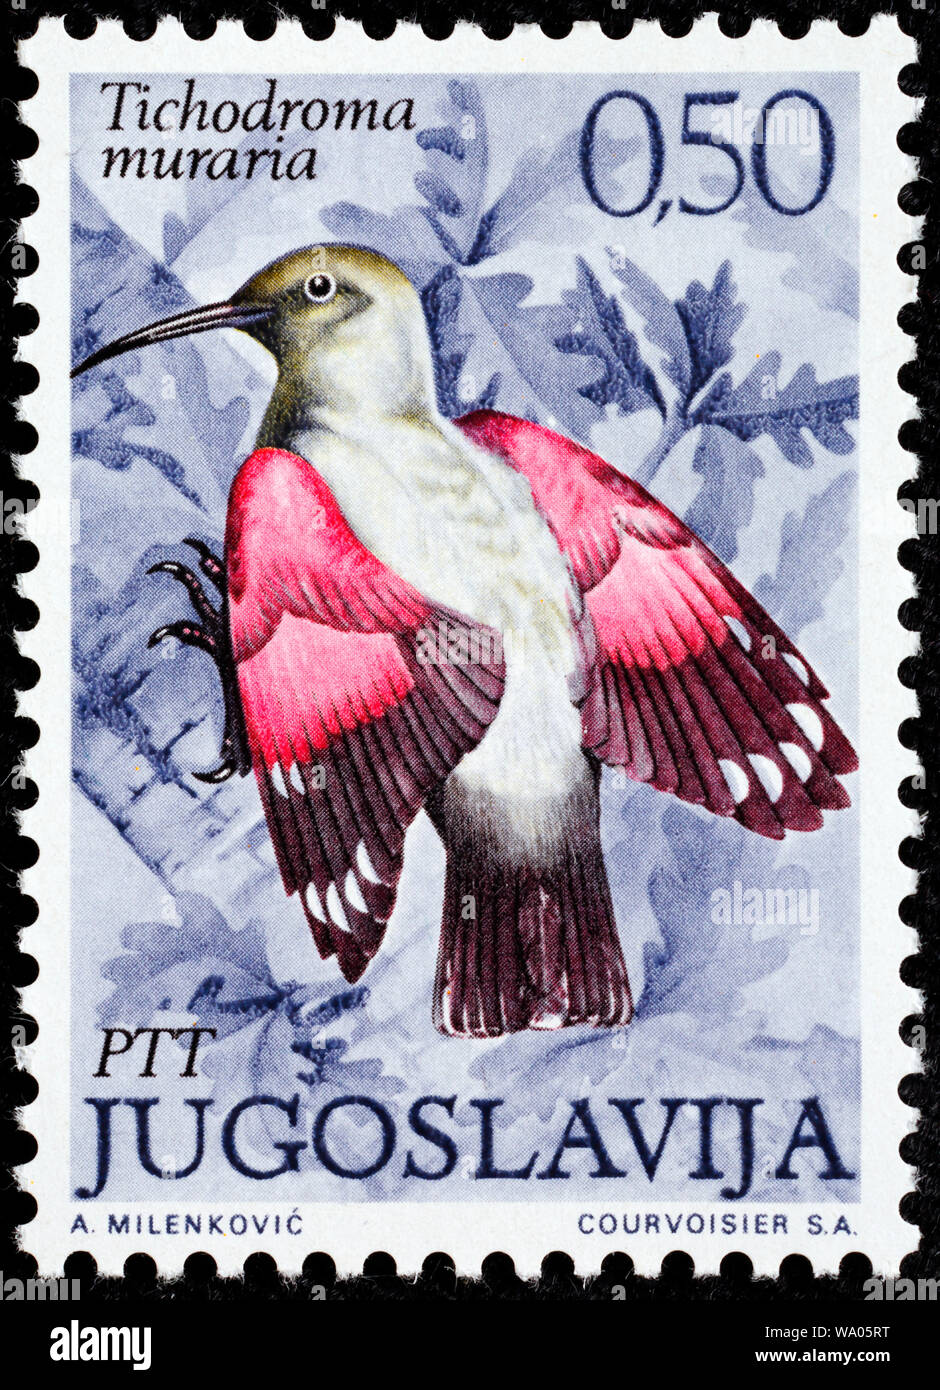 Wallcreeper, Tichodroma muraria, postage stamp, Yugoslavia, 1972 Stock Photo